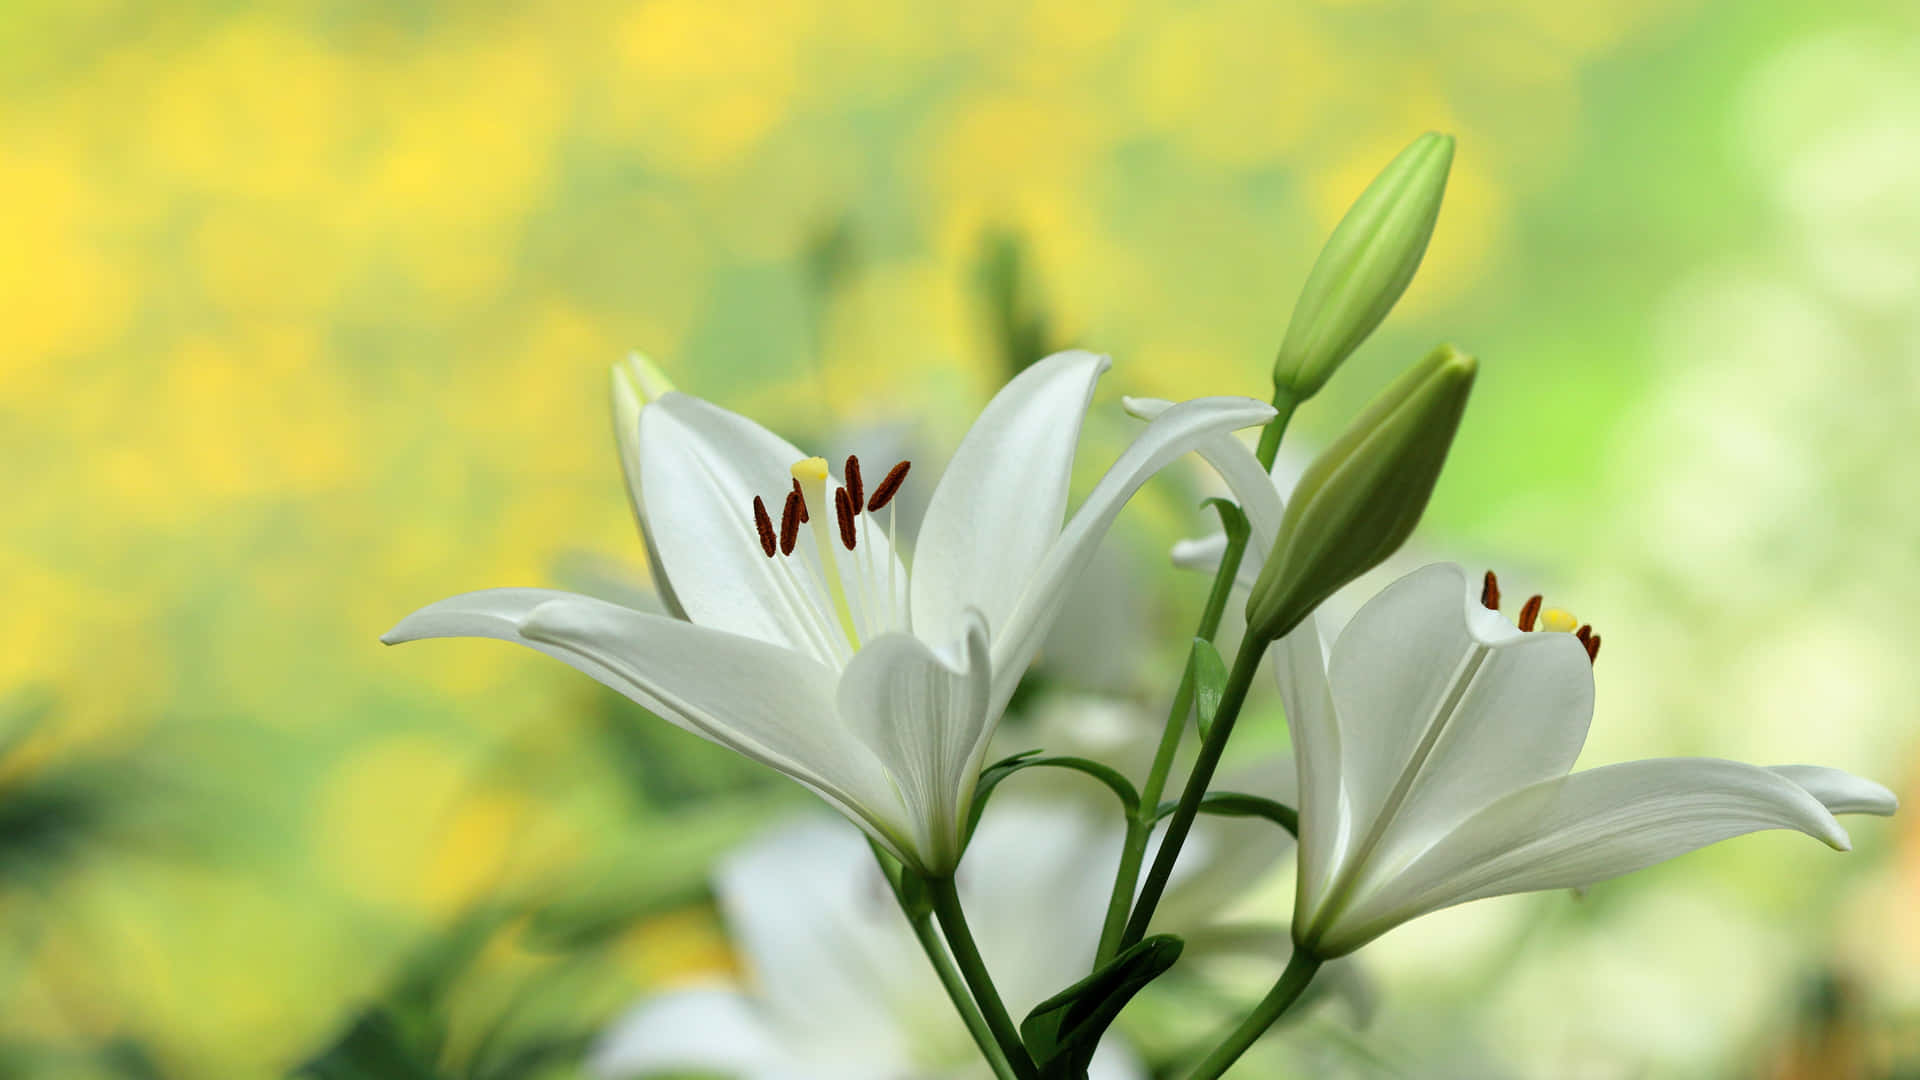 Caption: Elegant Lily on a Blurred Background